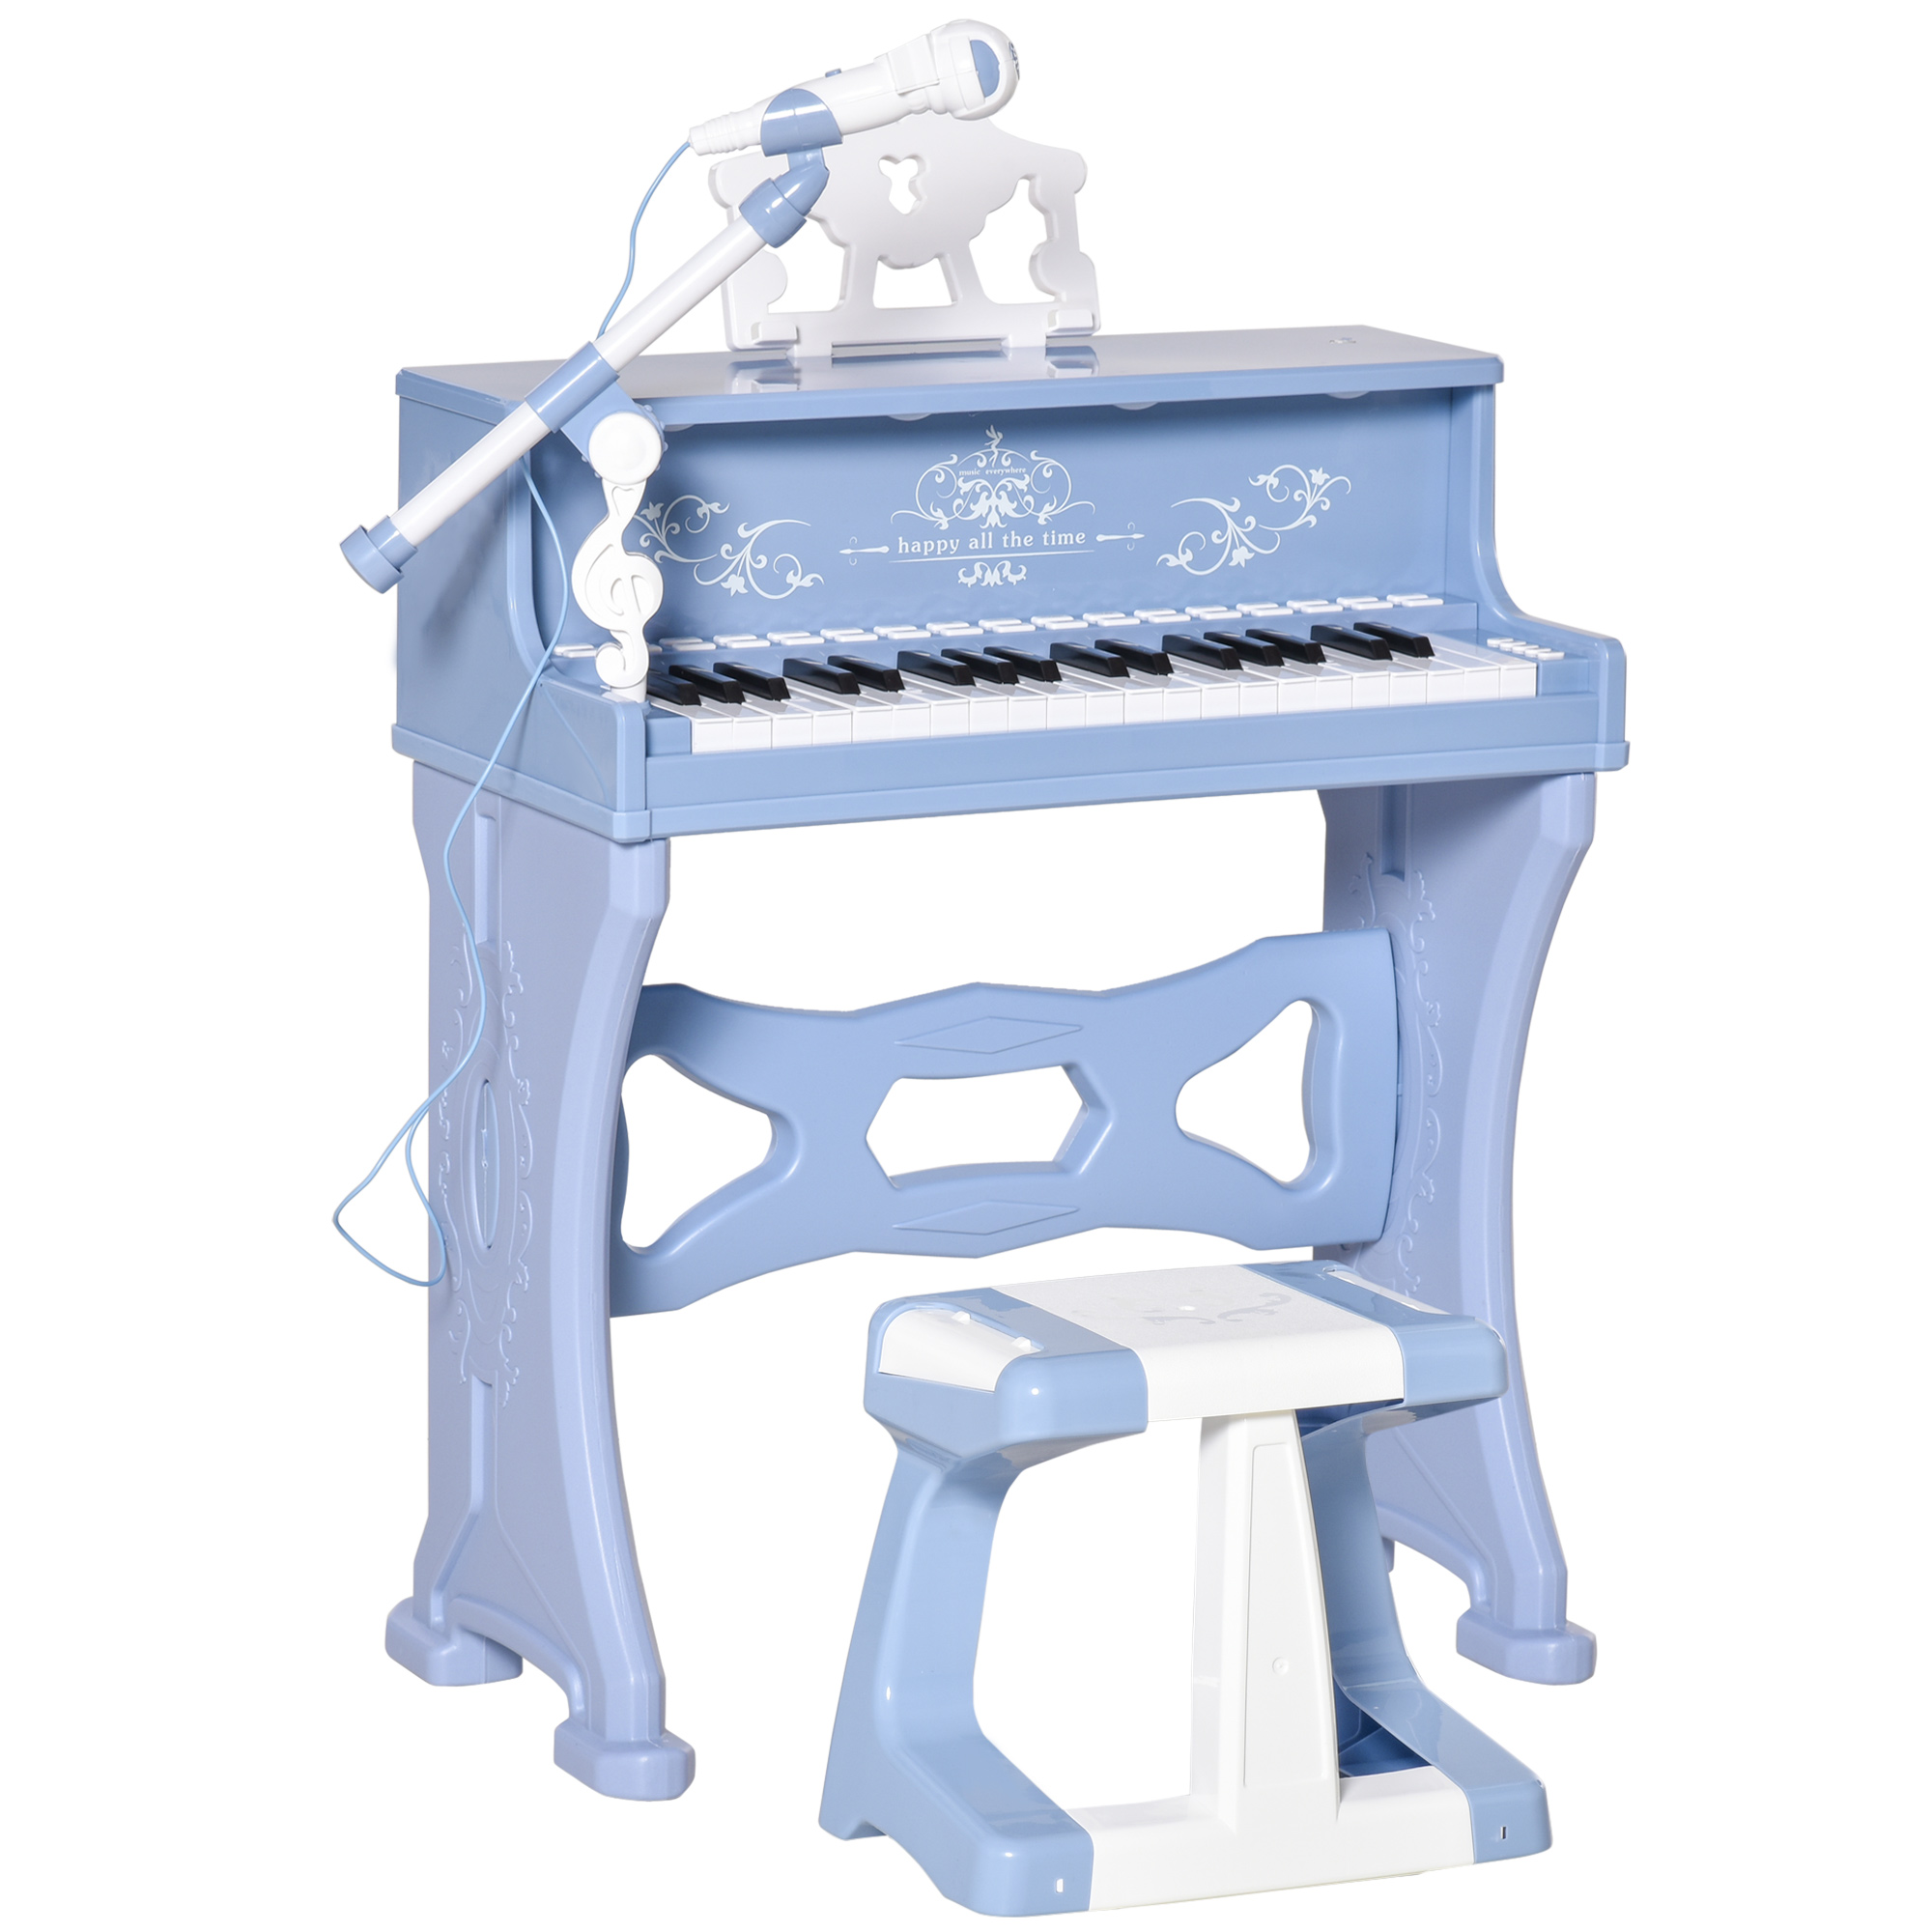 Digital Piano 61 Tasten Keyboard mit Mikrofon Multifunktions Klaviertastatur DHL 